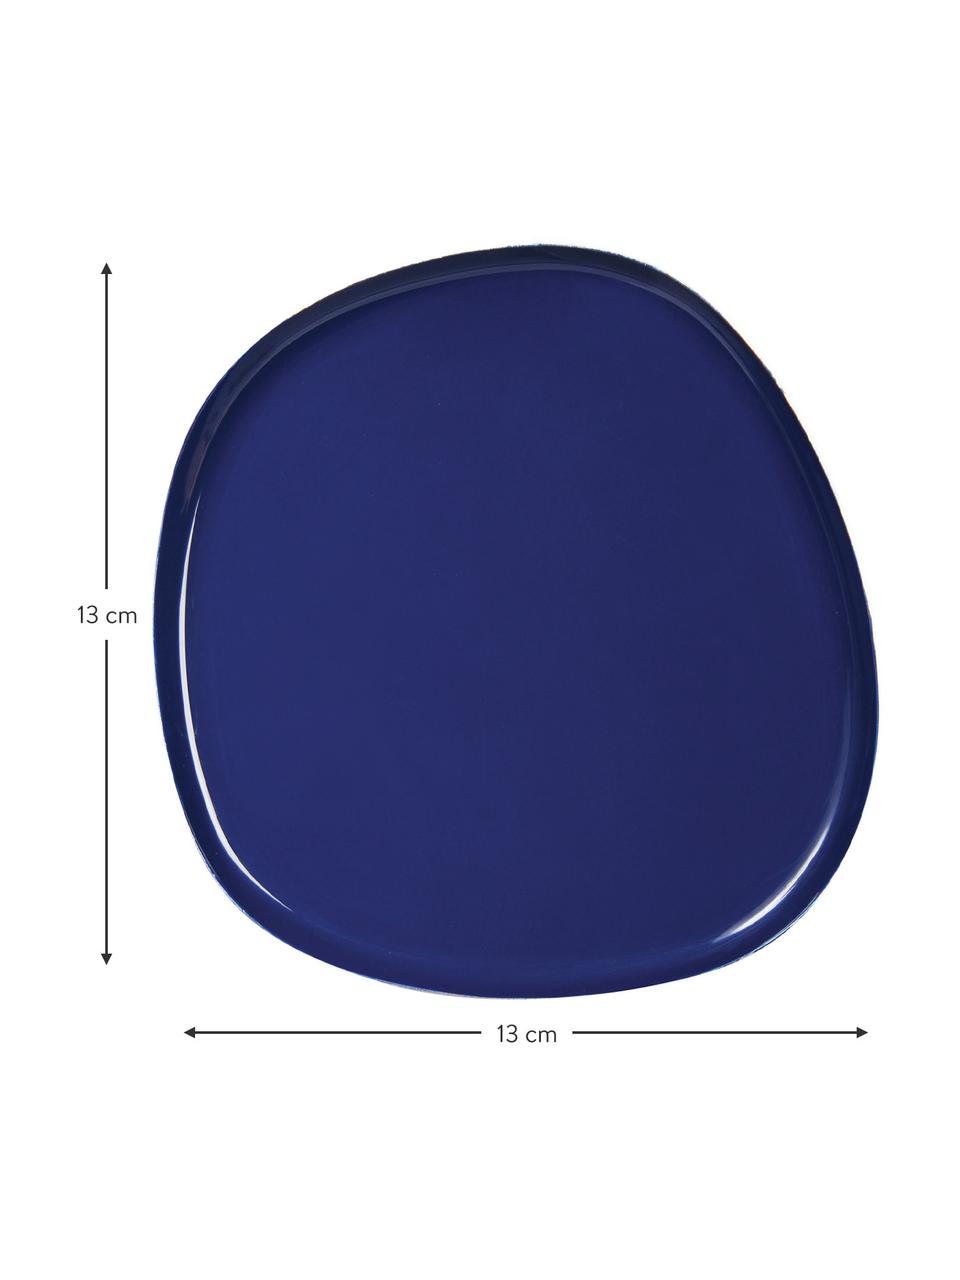 Kleines Deko-Tablett Imperfect aus Metall, Metall, beschichtet, Dunkelblau, B 13 x T 13 cm